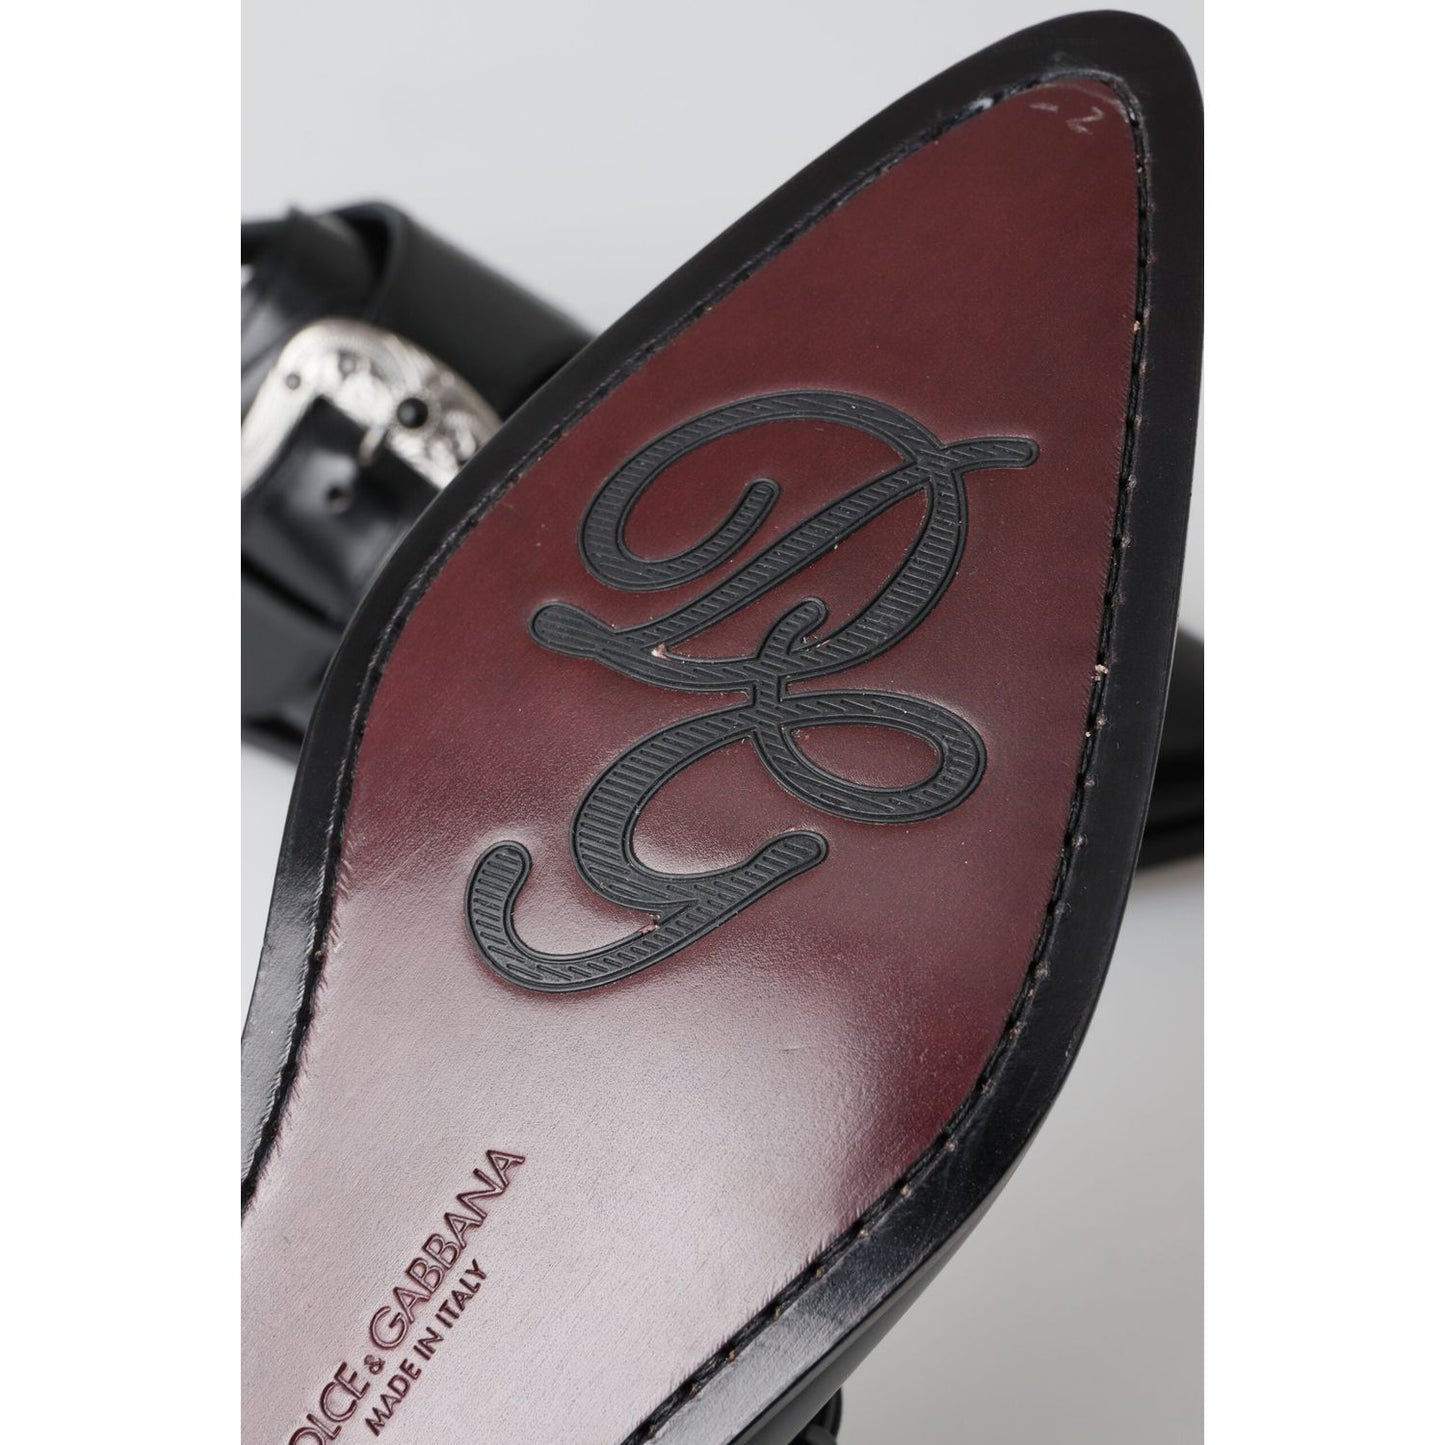 Dolce & Gabbana Elegant Black Leather Monk Strap Shoes black-leather-monk-strap-dress-formal-shoes